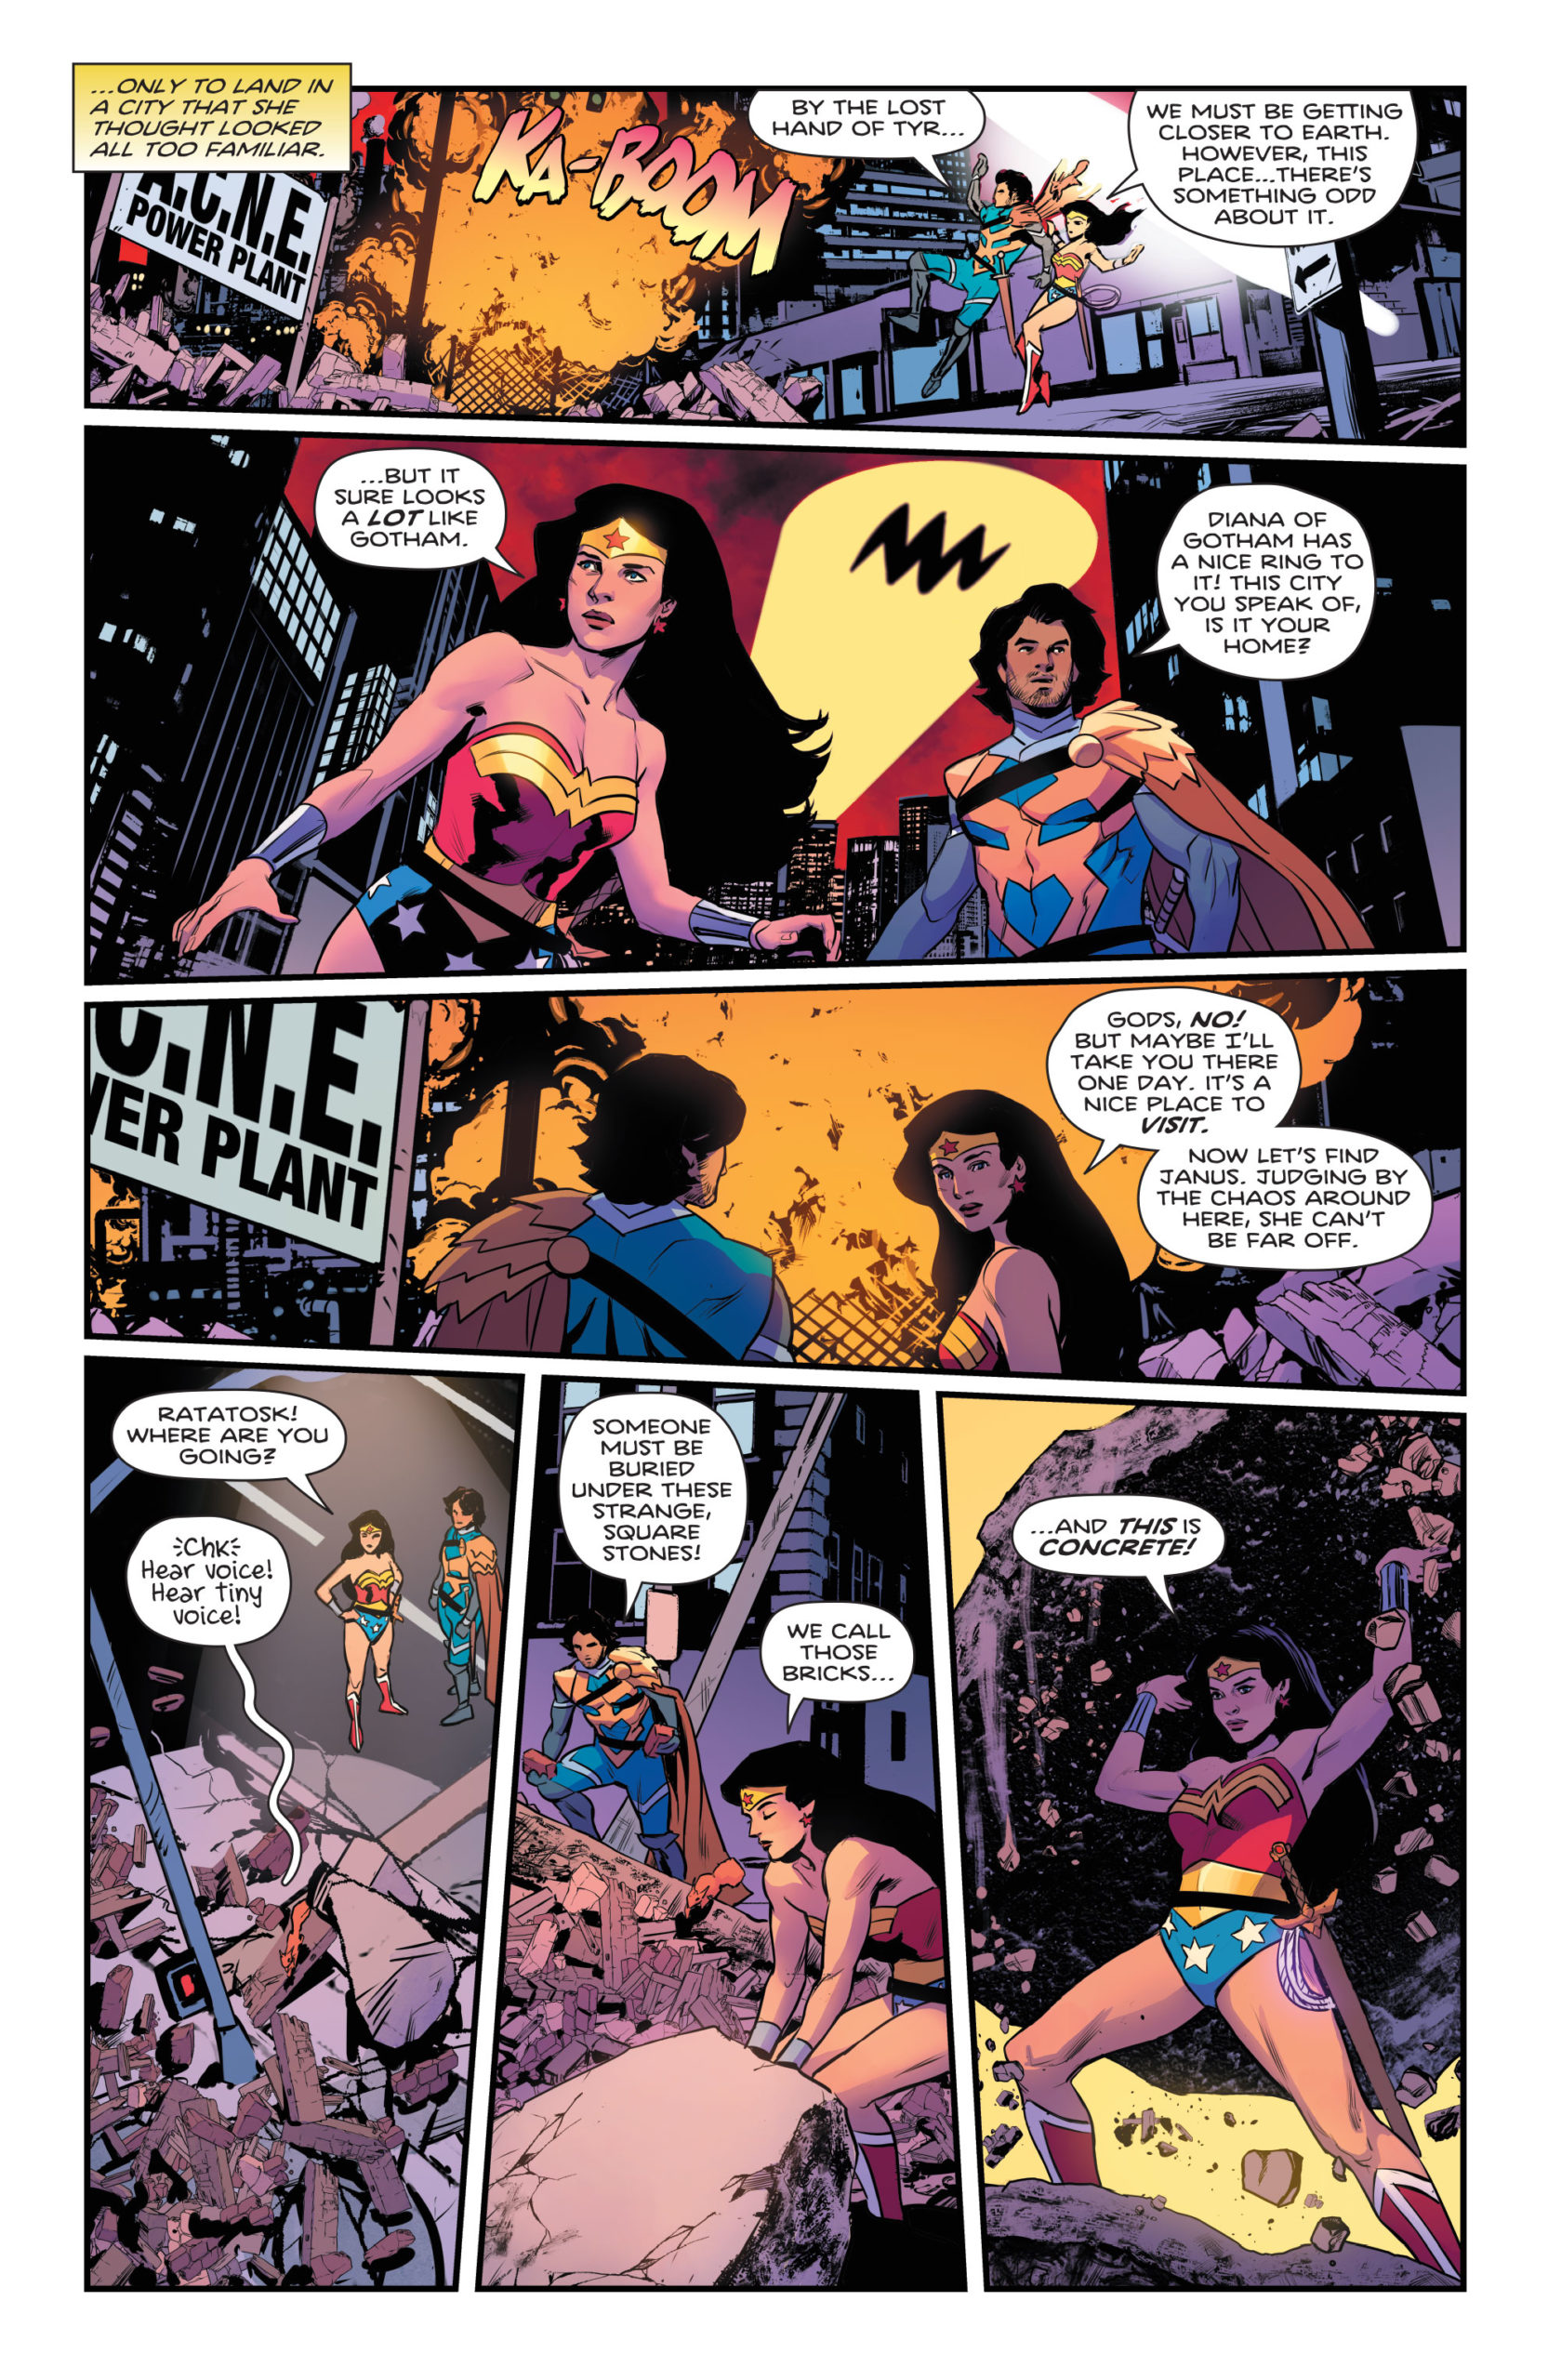 Wonder Woman 778 DC Comics News